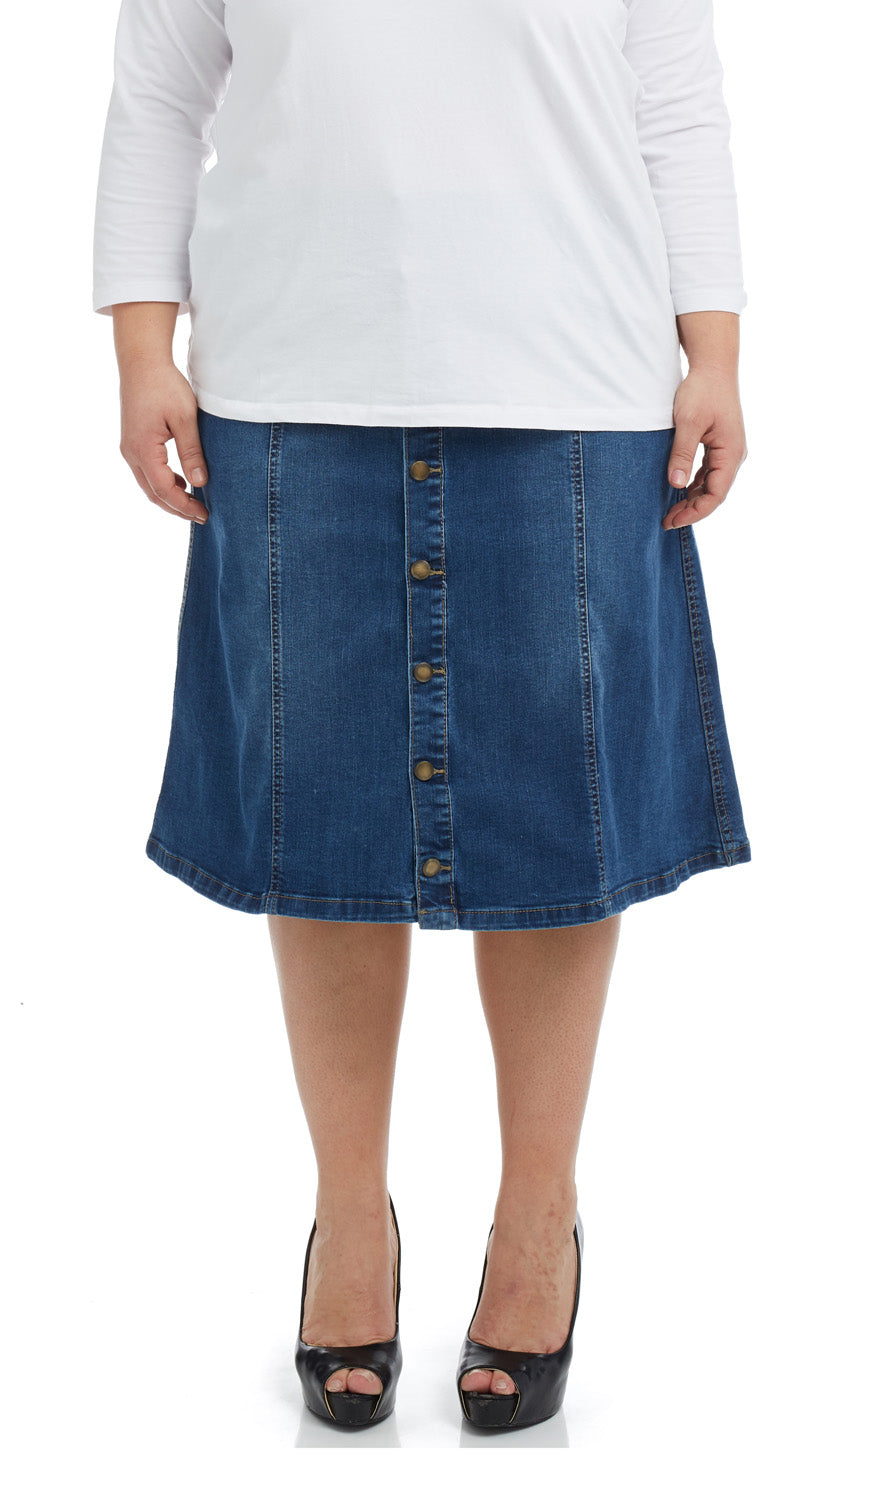 blue modest tznius jean skirt for women and teens